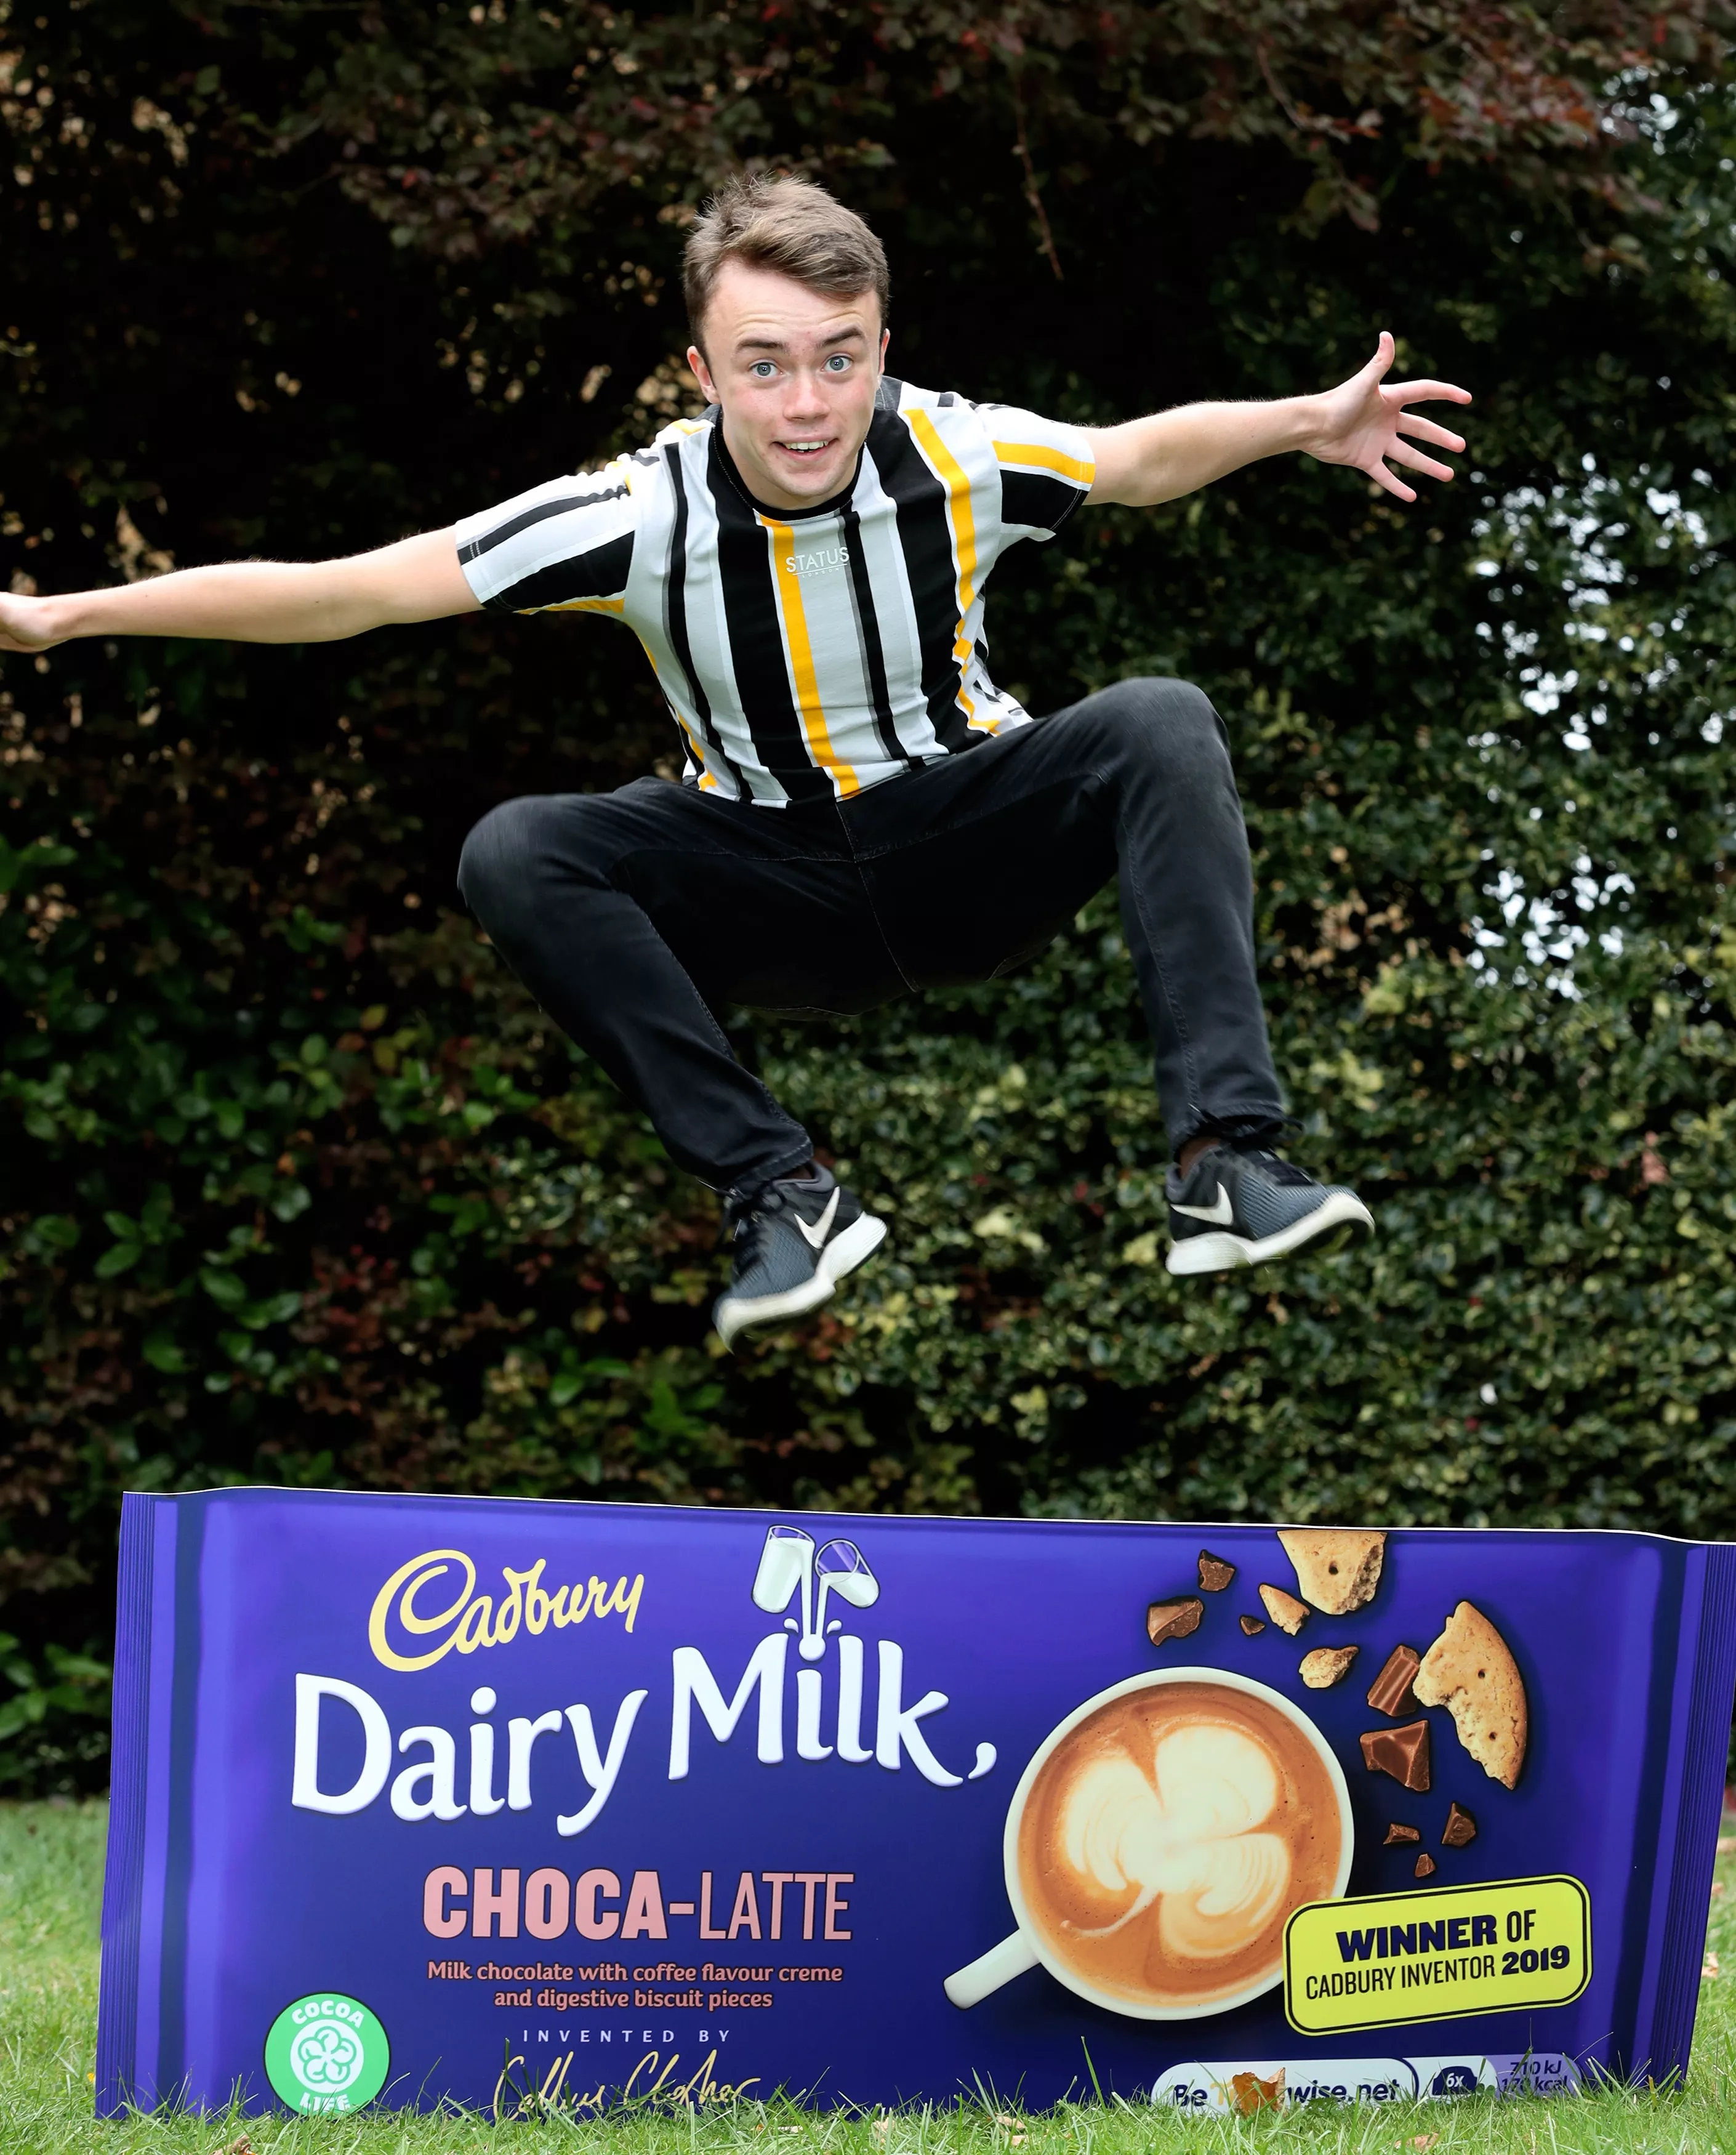 Roscommon teen creates new Cadbury’s chocolate flavour